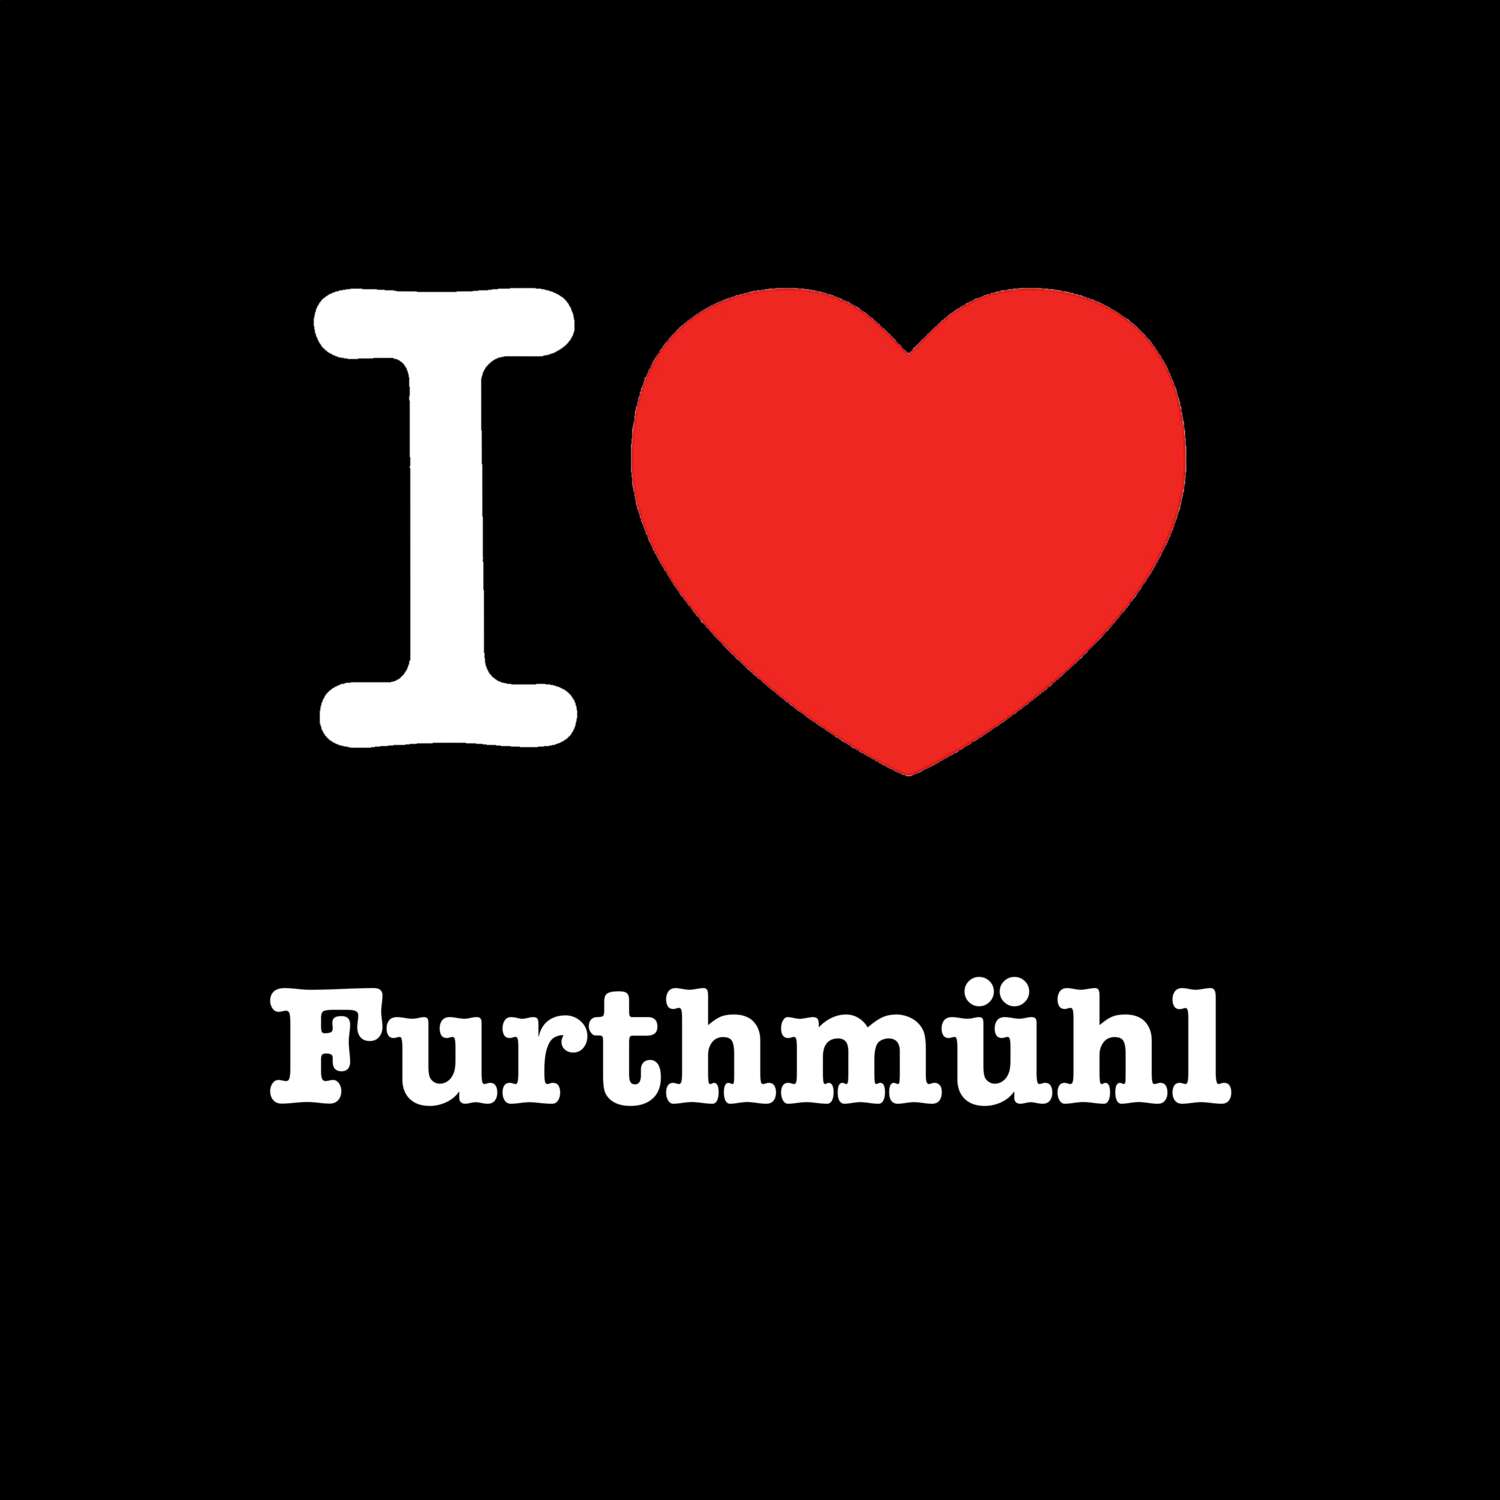 Furthmühl T-Shirt »I love«